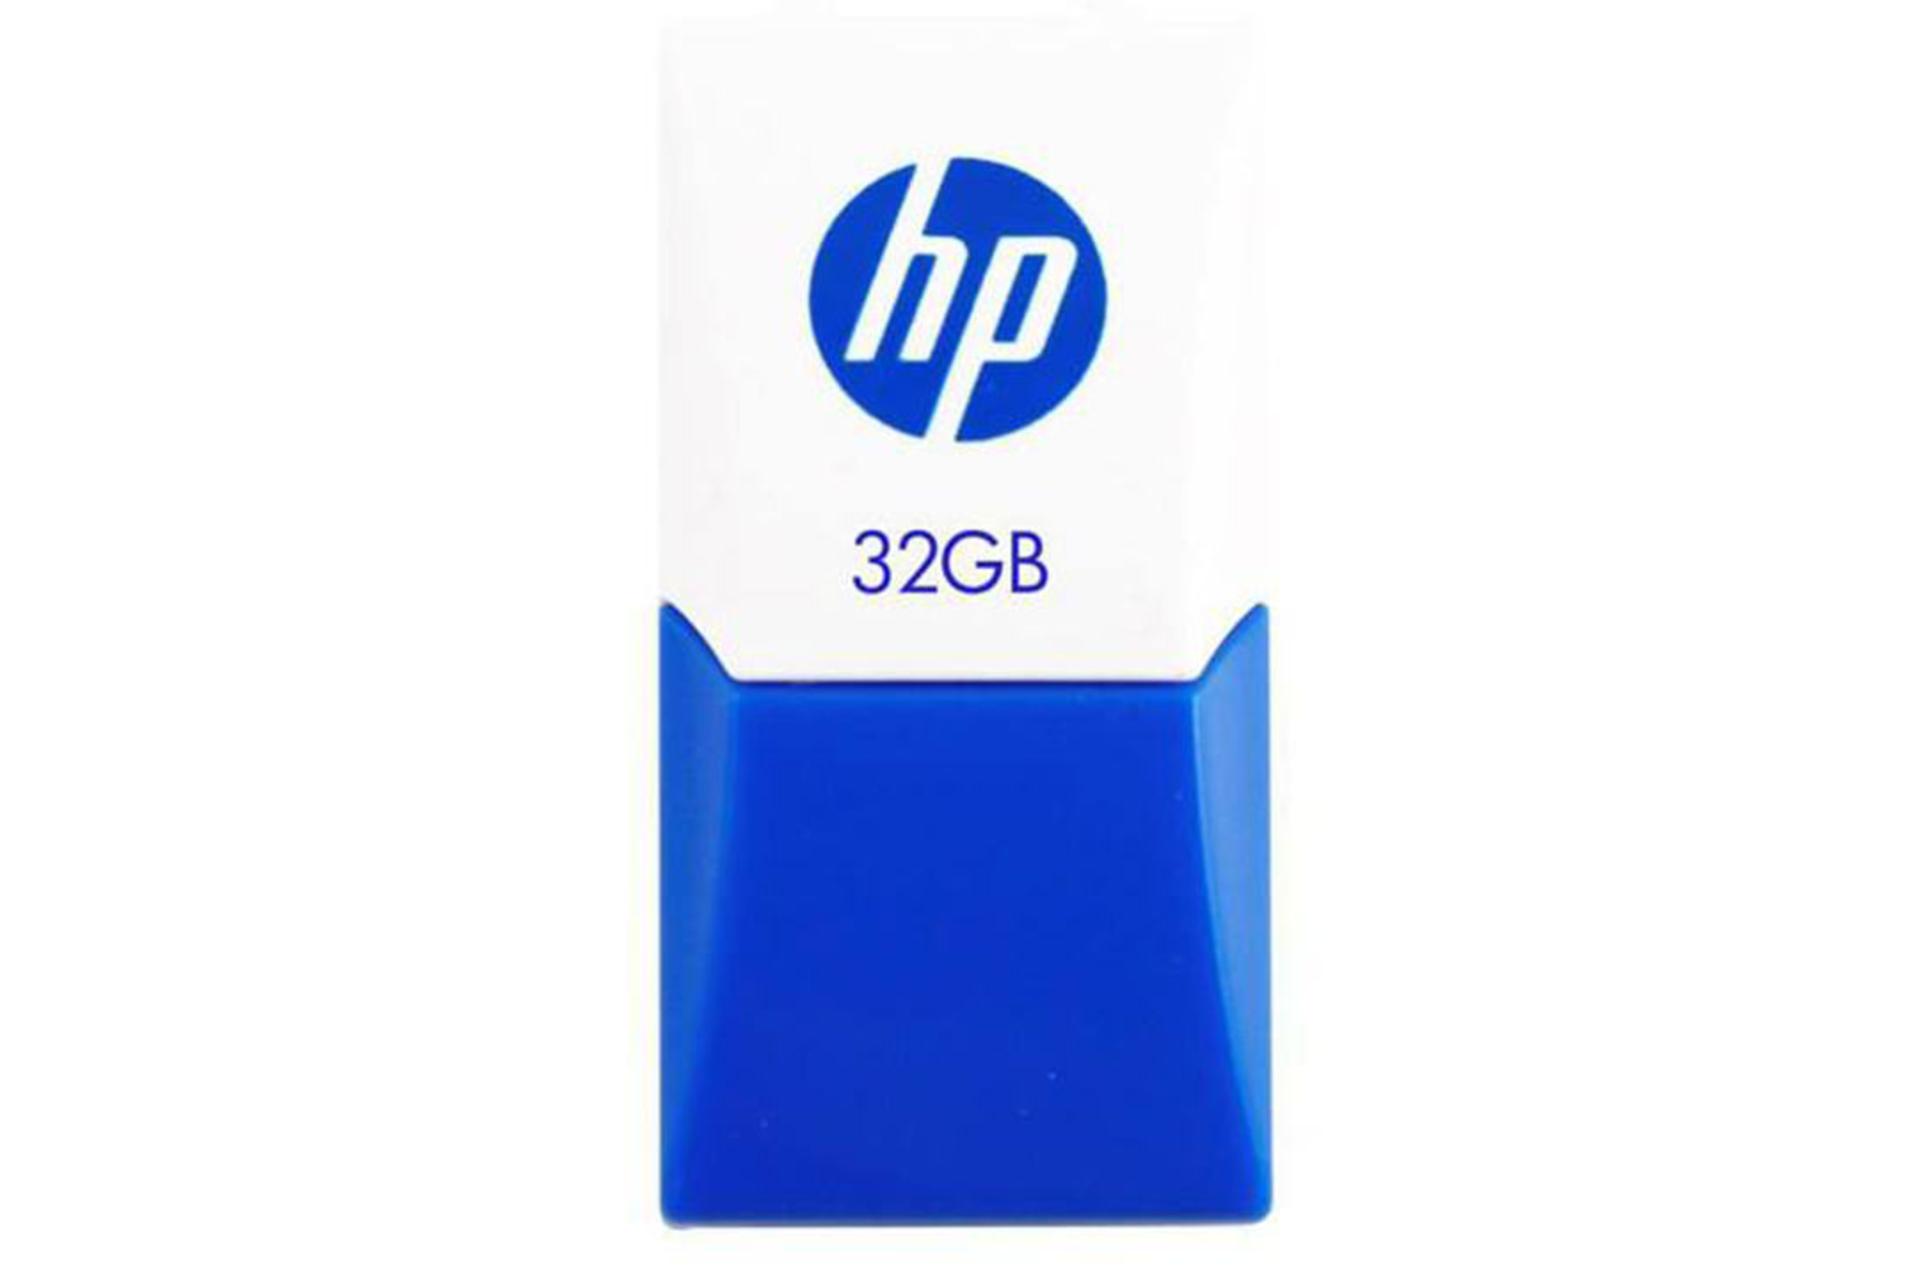 HP v160 32GB